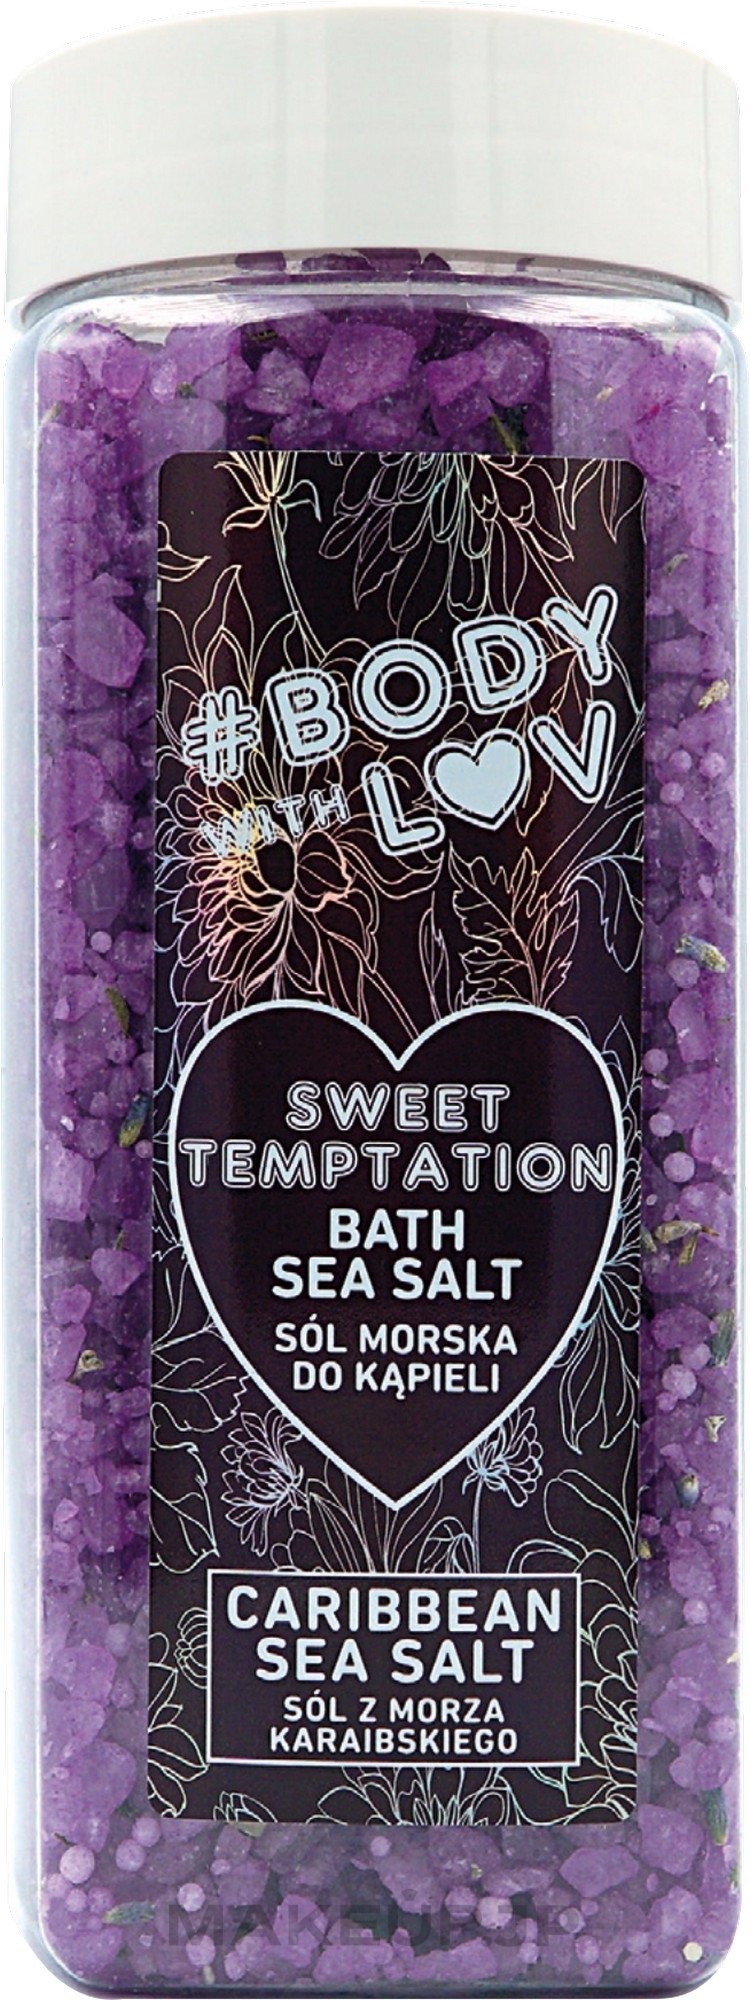 Bath Salt "Sweet Temptation" - New Anna Cosmetics Body With Luv Sea Salt For Bath Sweet Temptation — photo 500 g